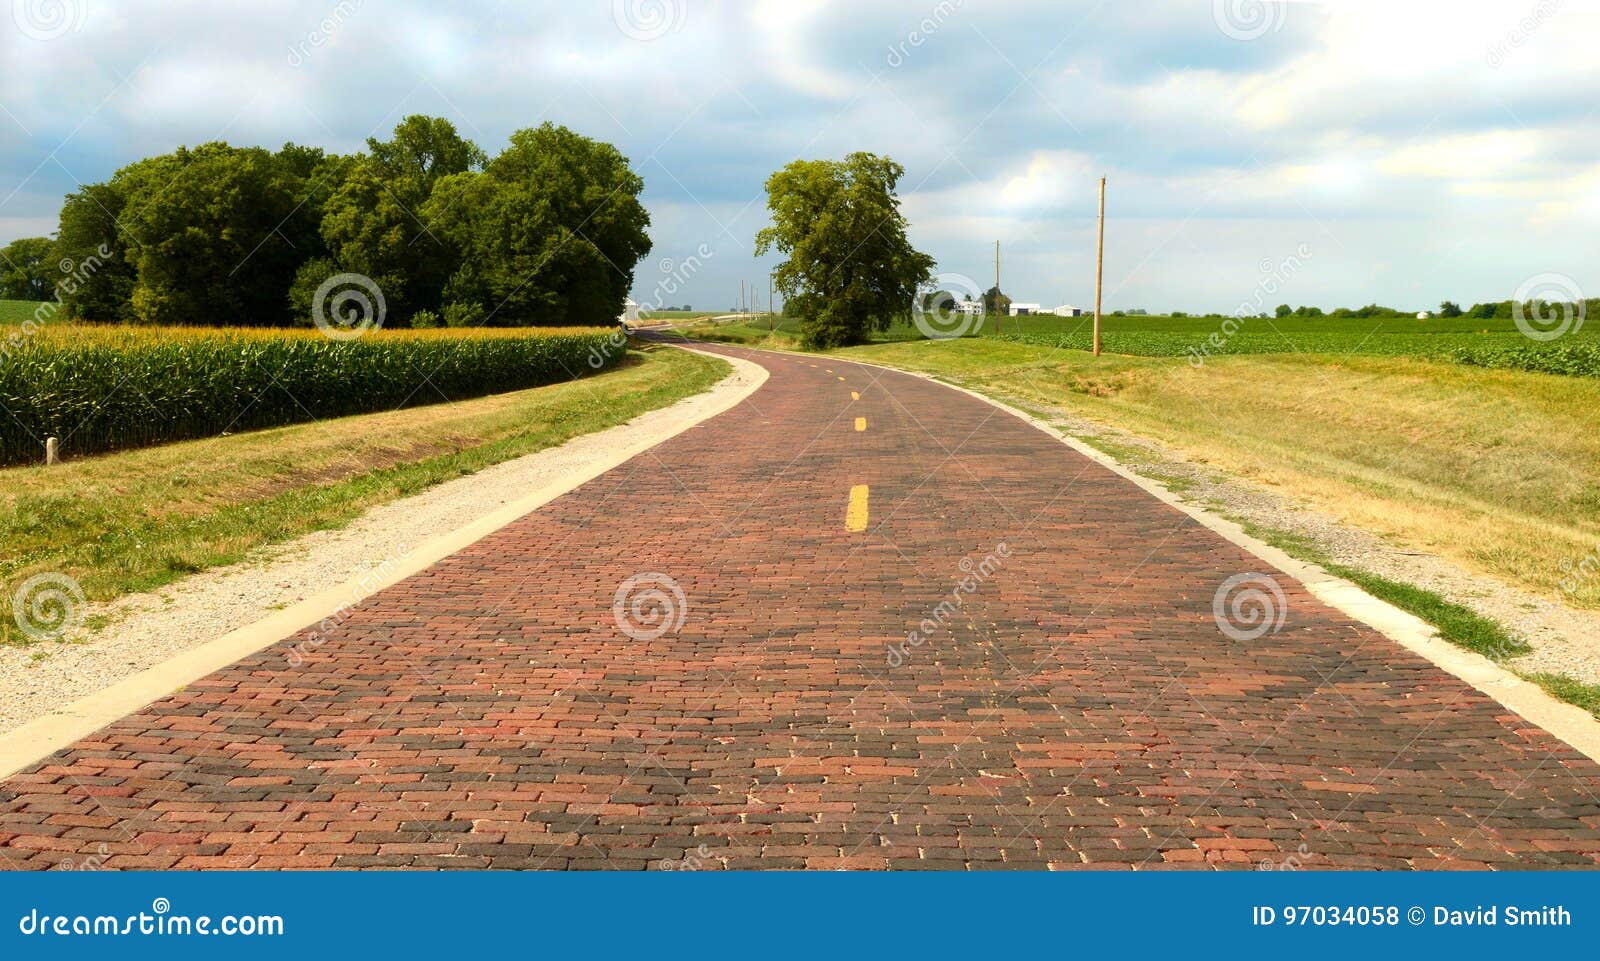 original section of brick road on route 66 near auburn, illinois